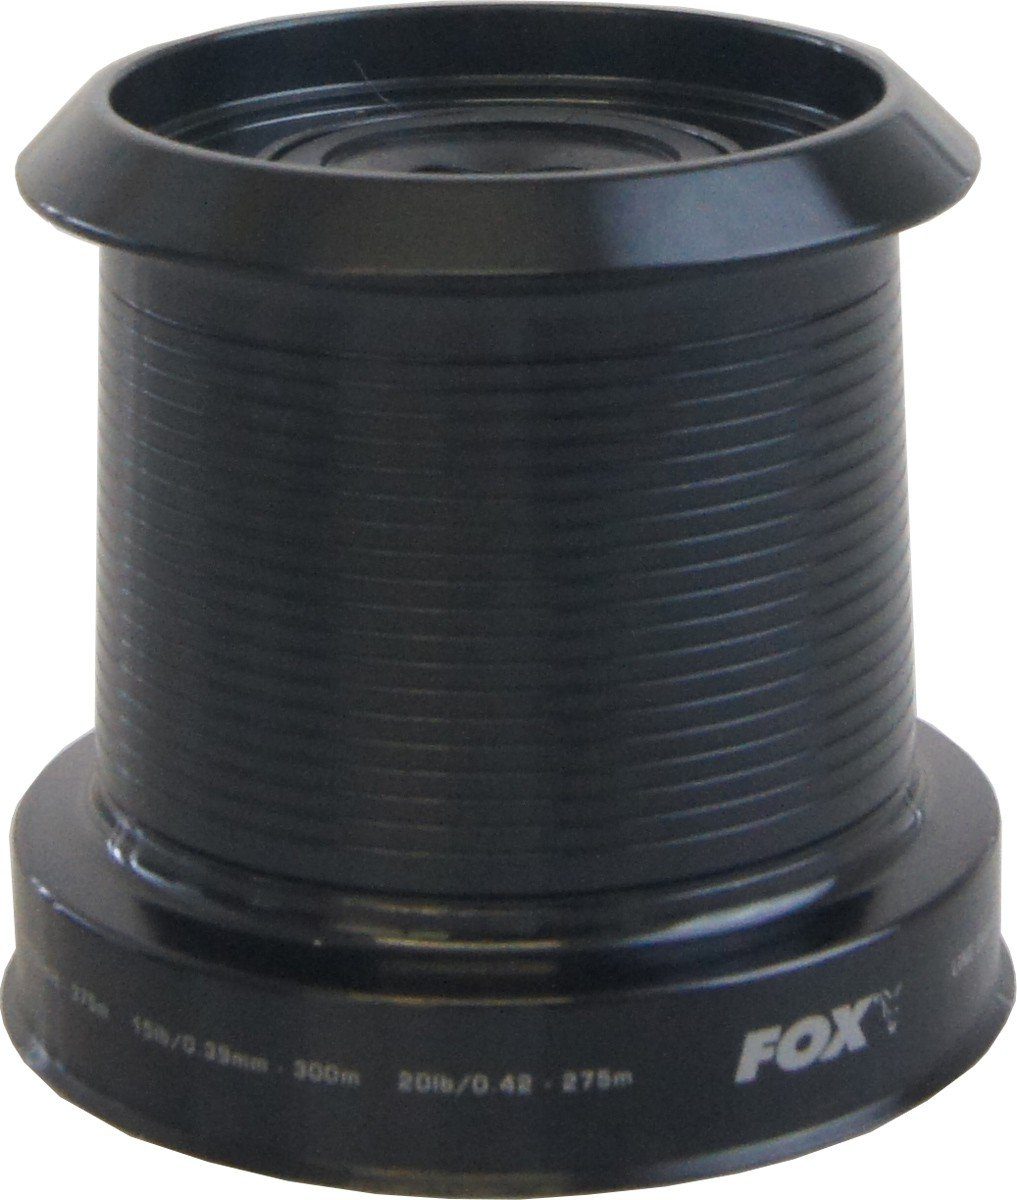 International Eos Spool 12000 - FOX Spare standard Multirolle Ersatzspule)